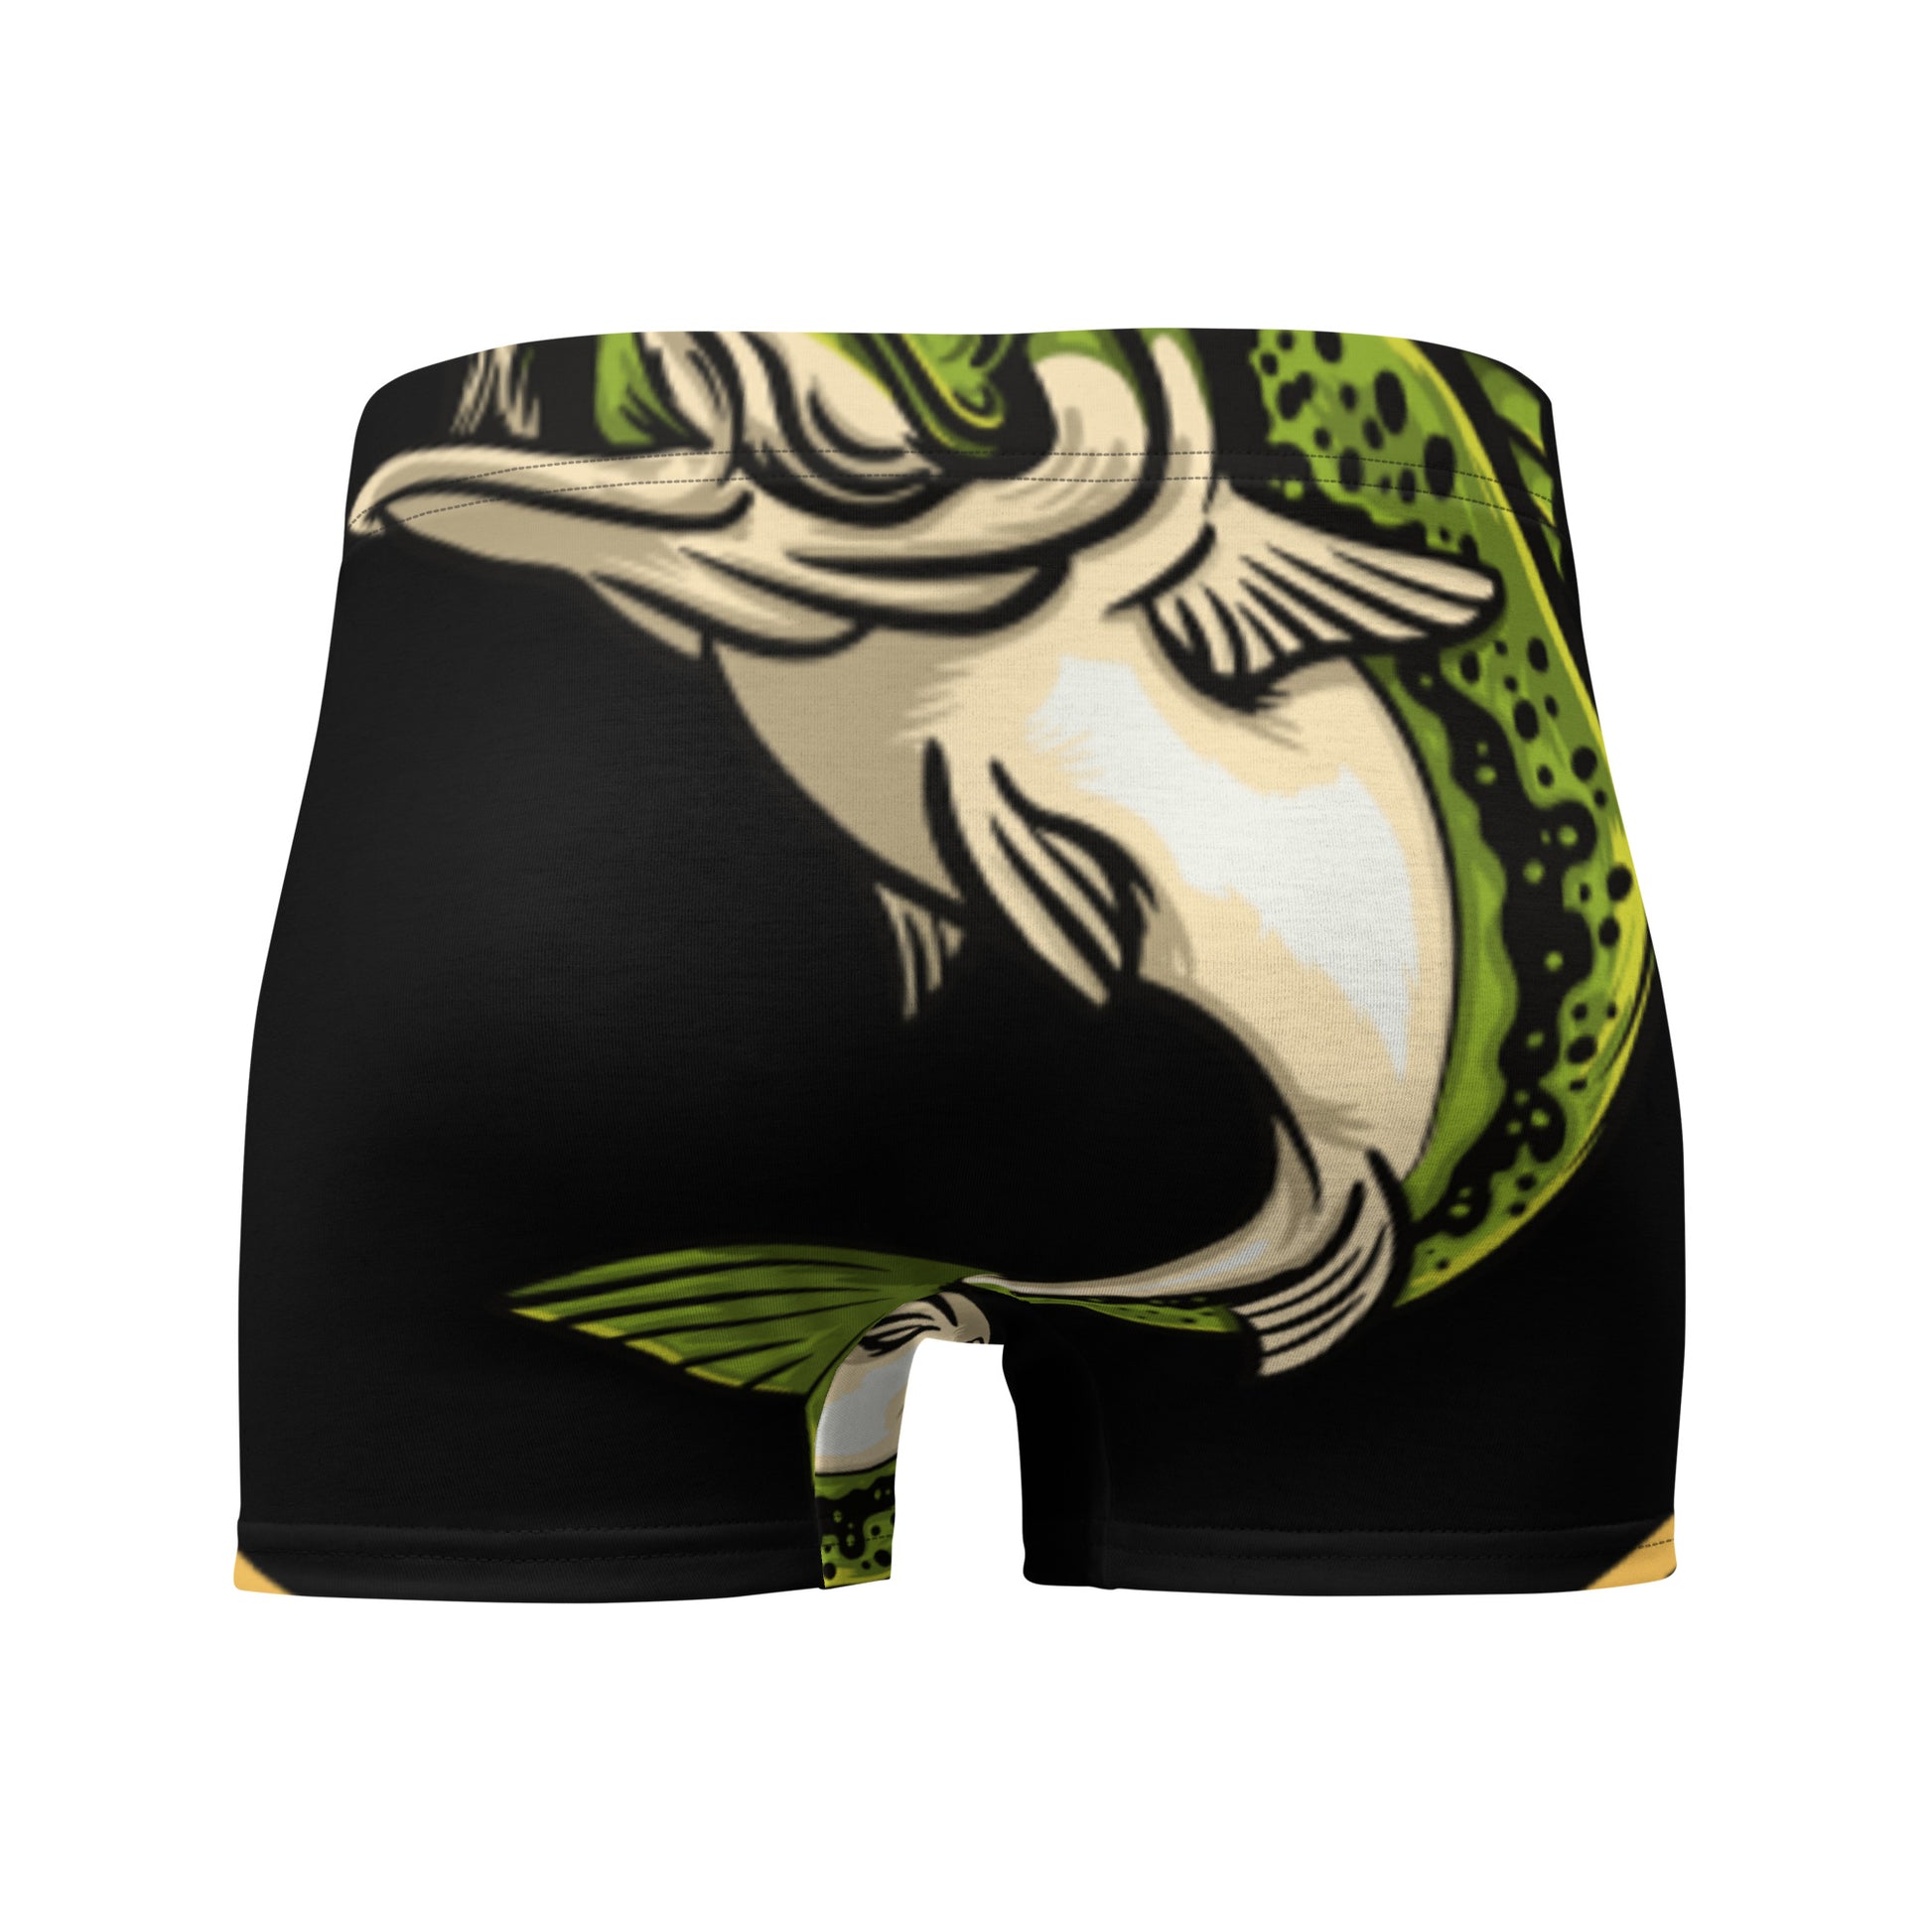 Big Fish Guy® Underwear Boxer Briefs For Men – jess went fishing®